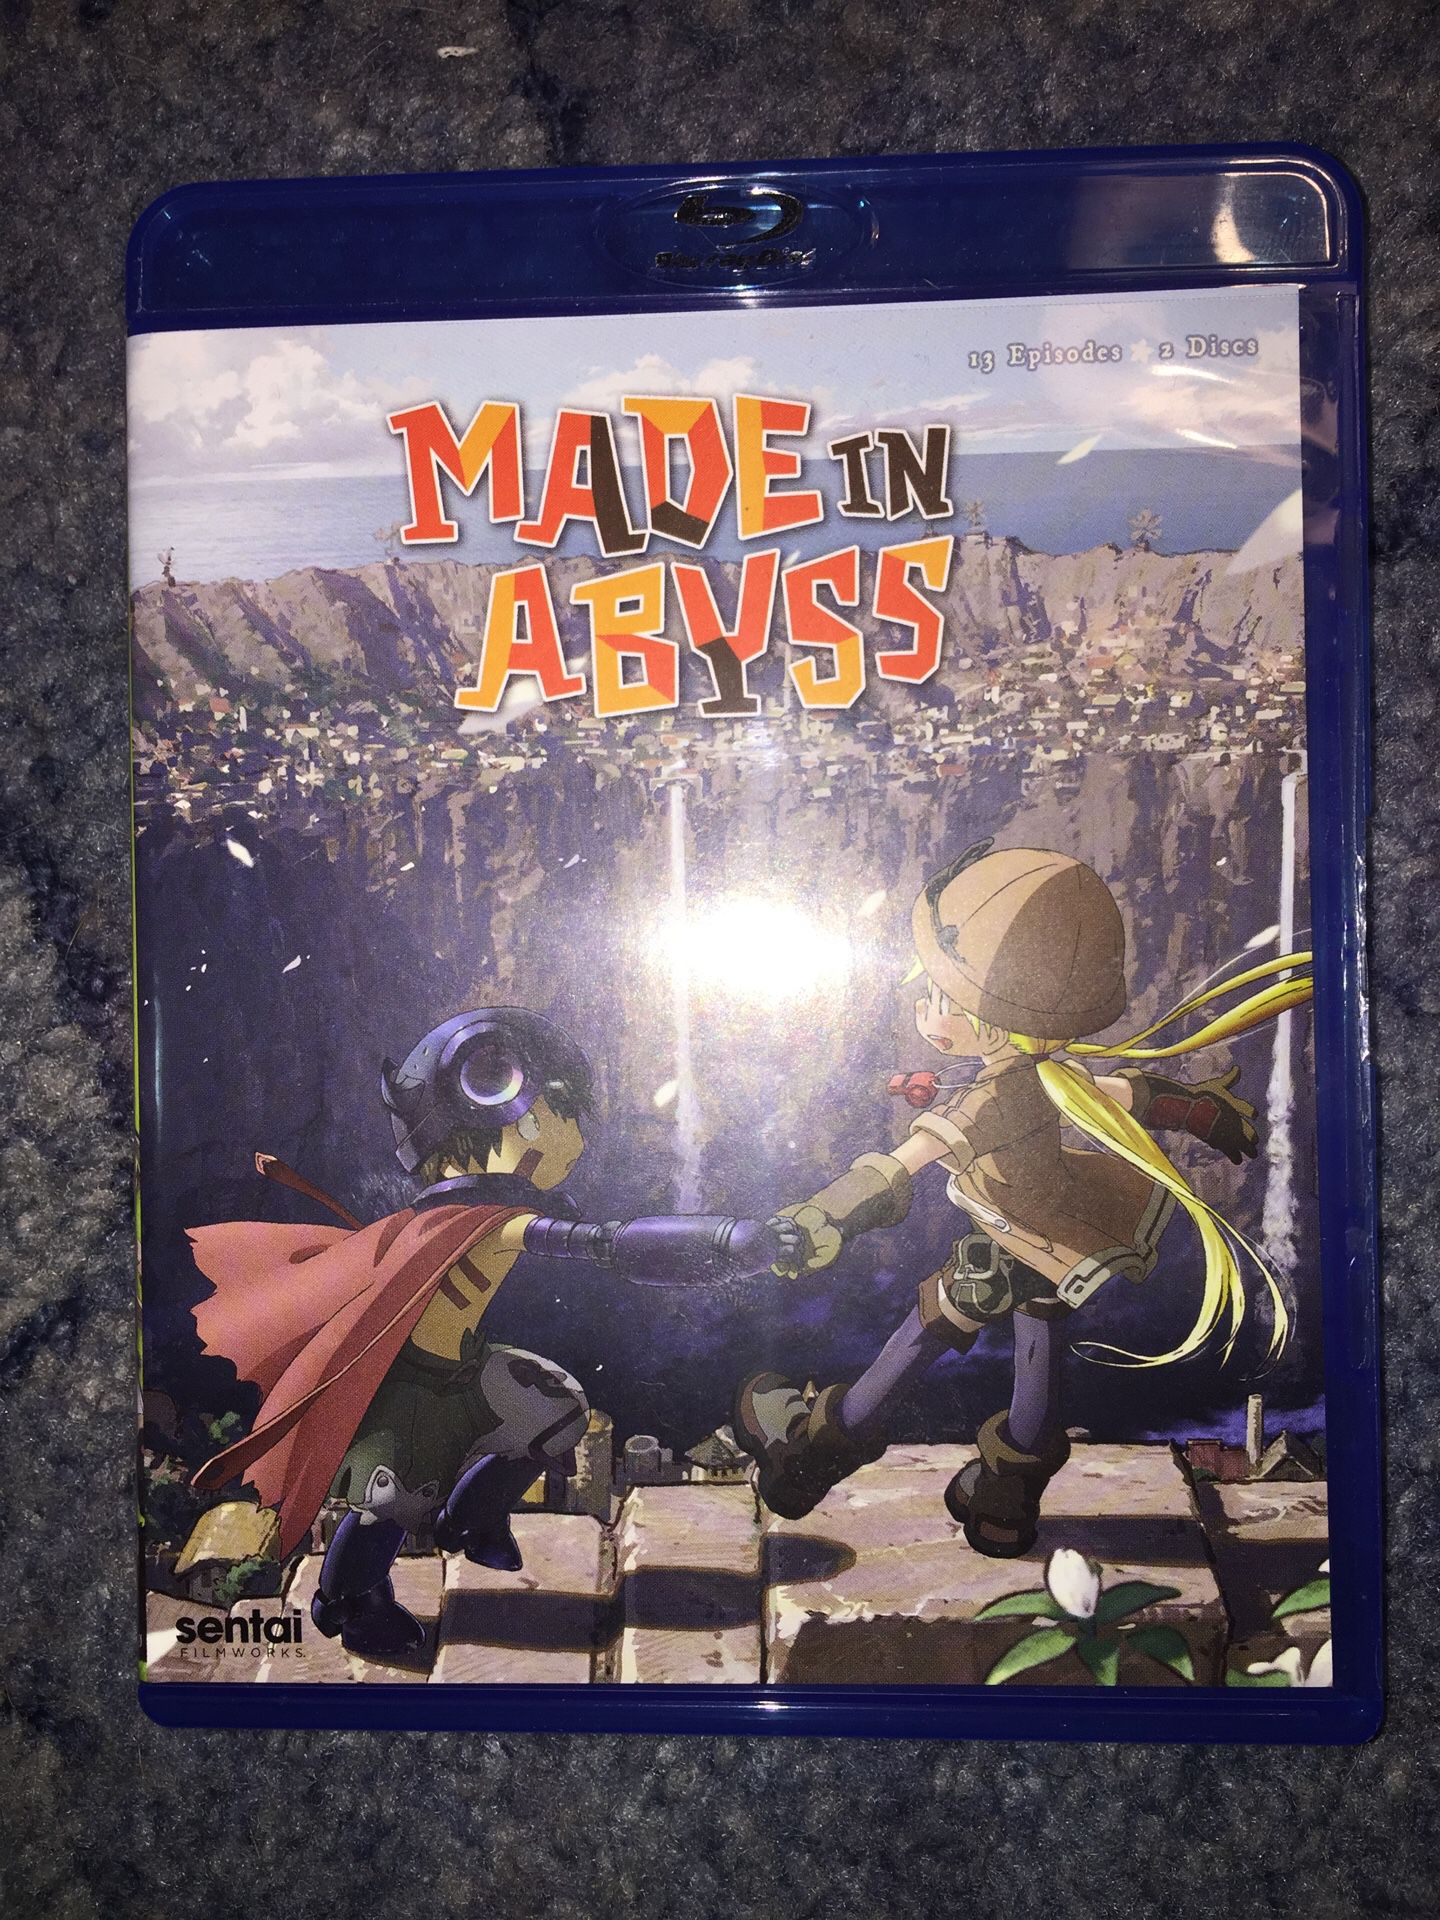 Made in abyss anime full season 1 + OVA (English dub)